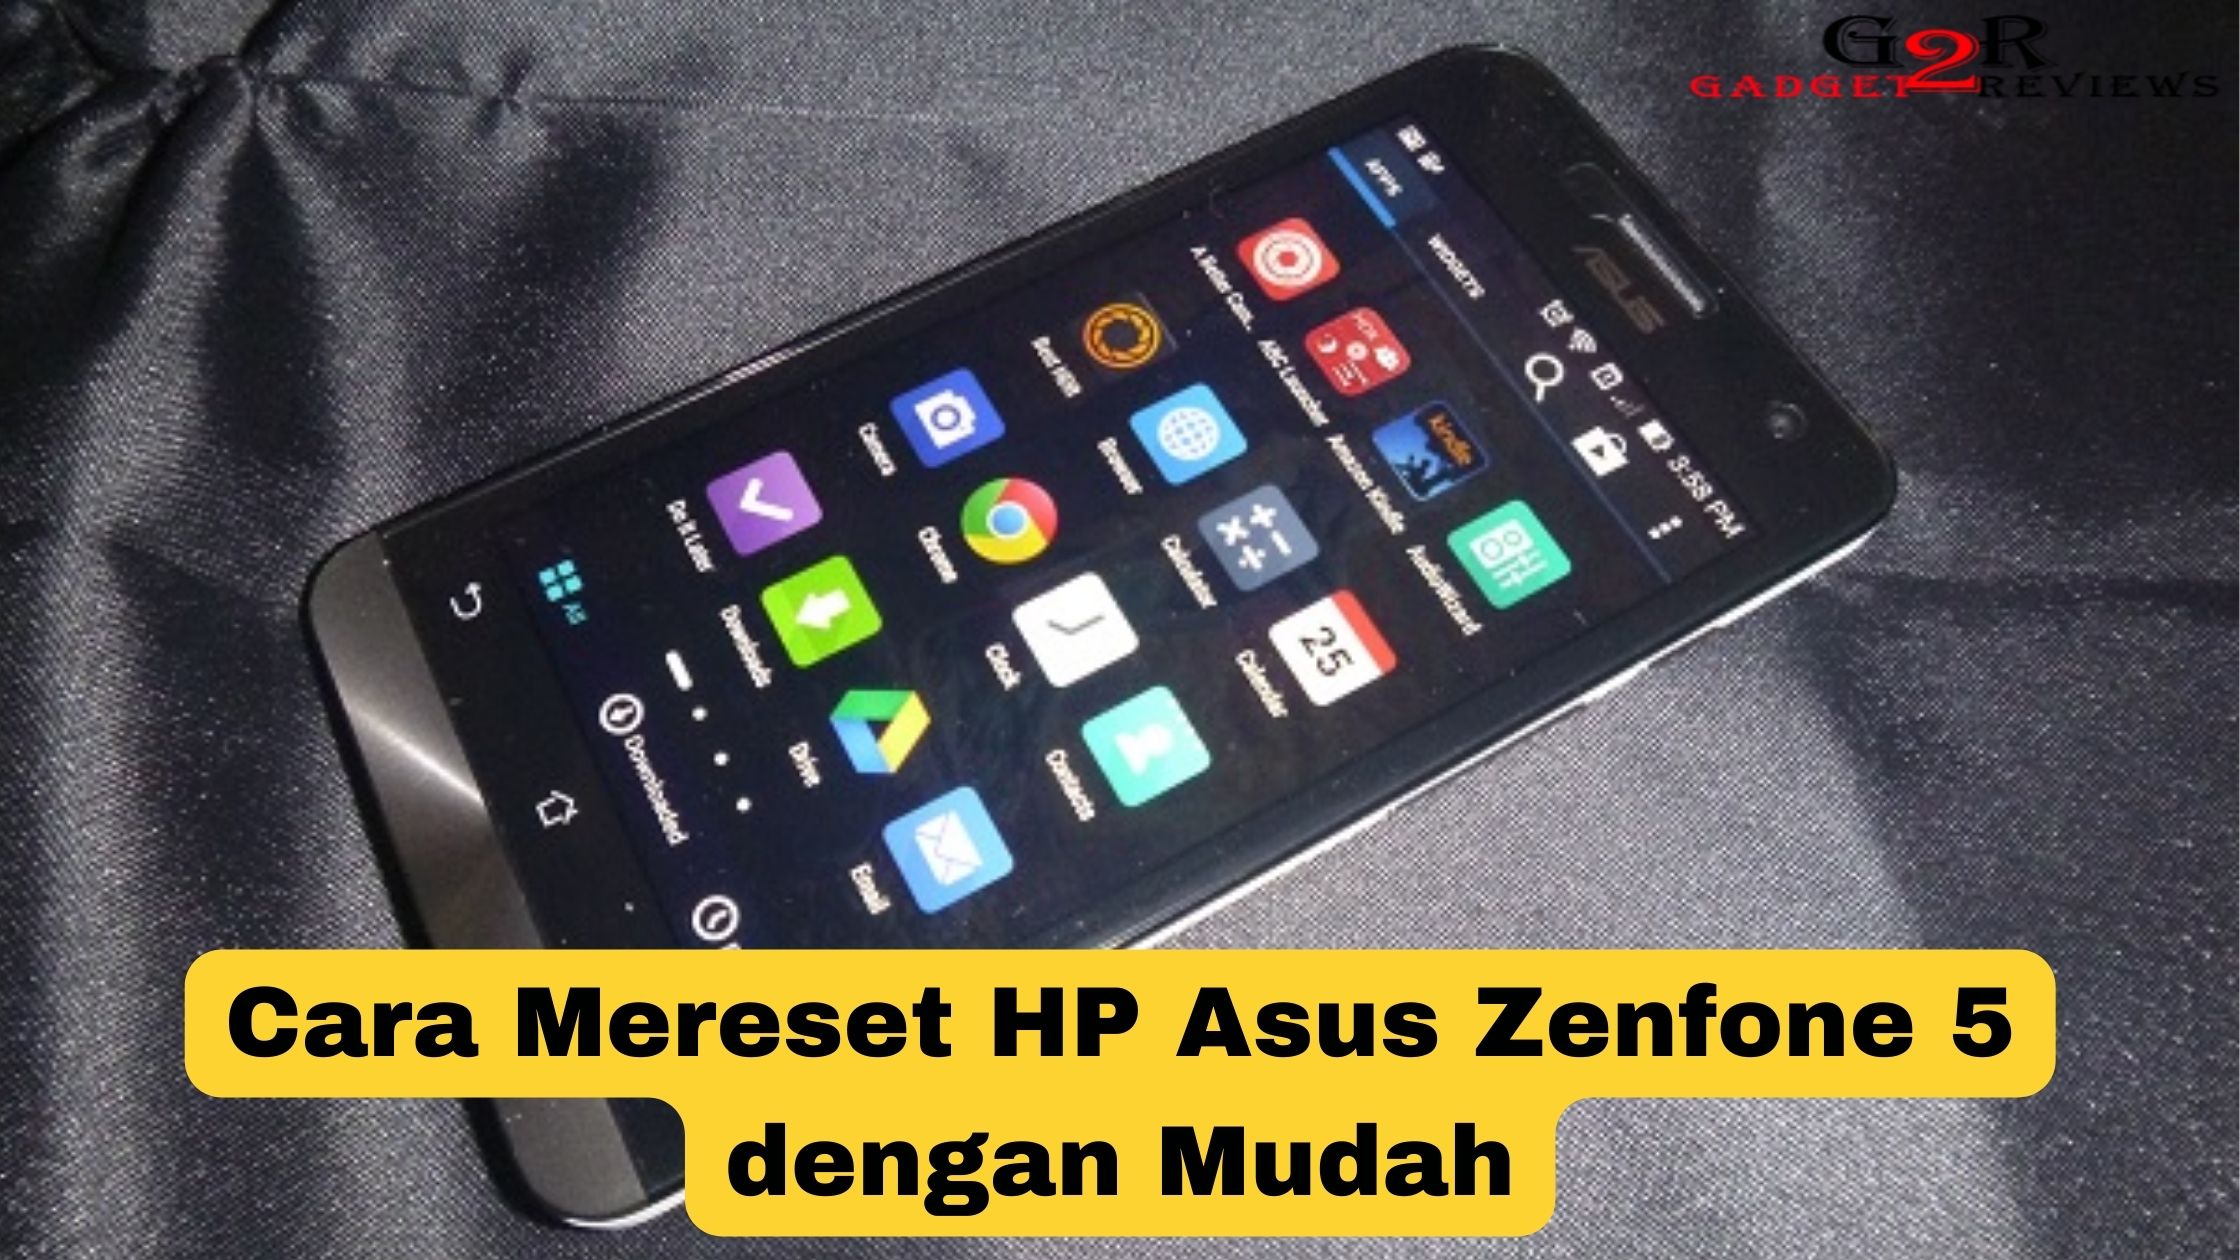 Cara Mereset HP Asus Zenfone 5